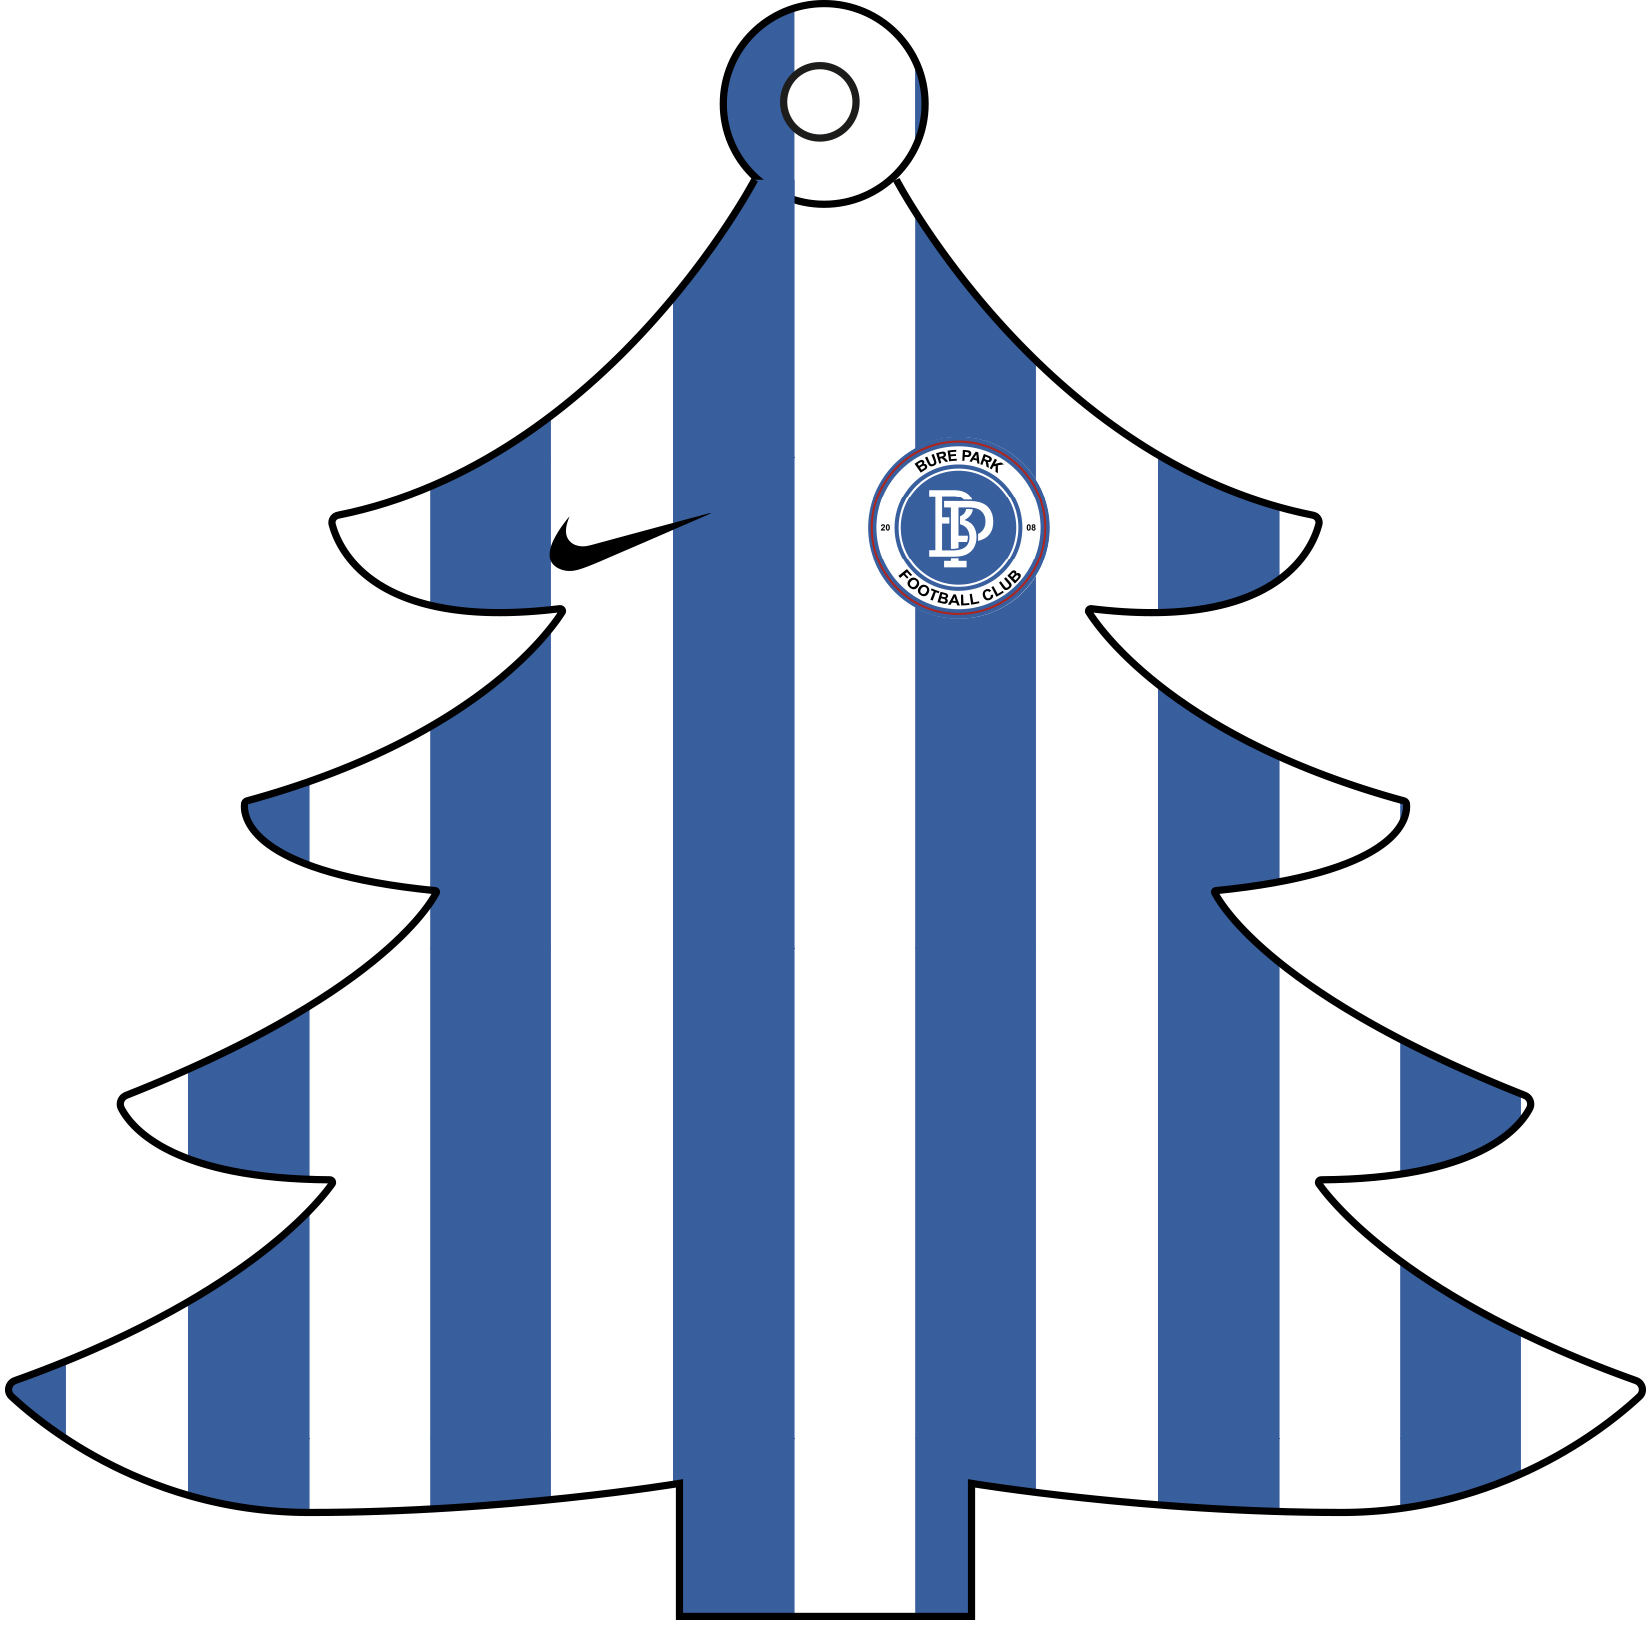 Christmas Decoration - Tree